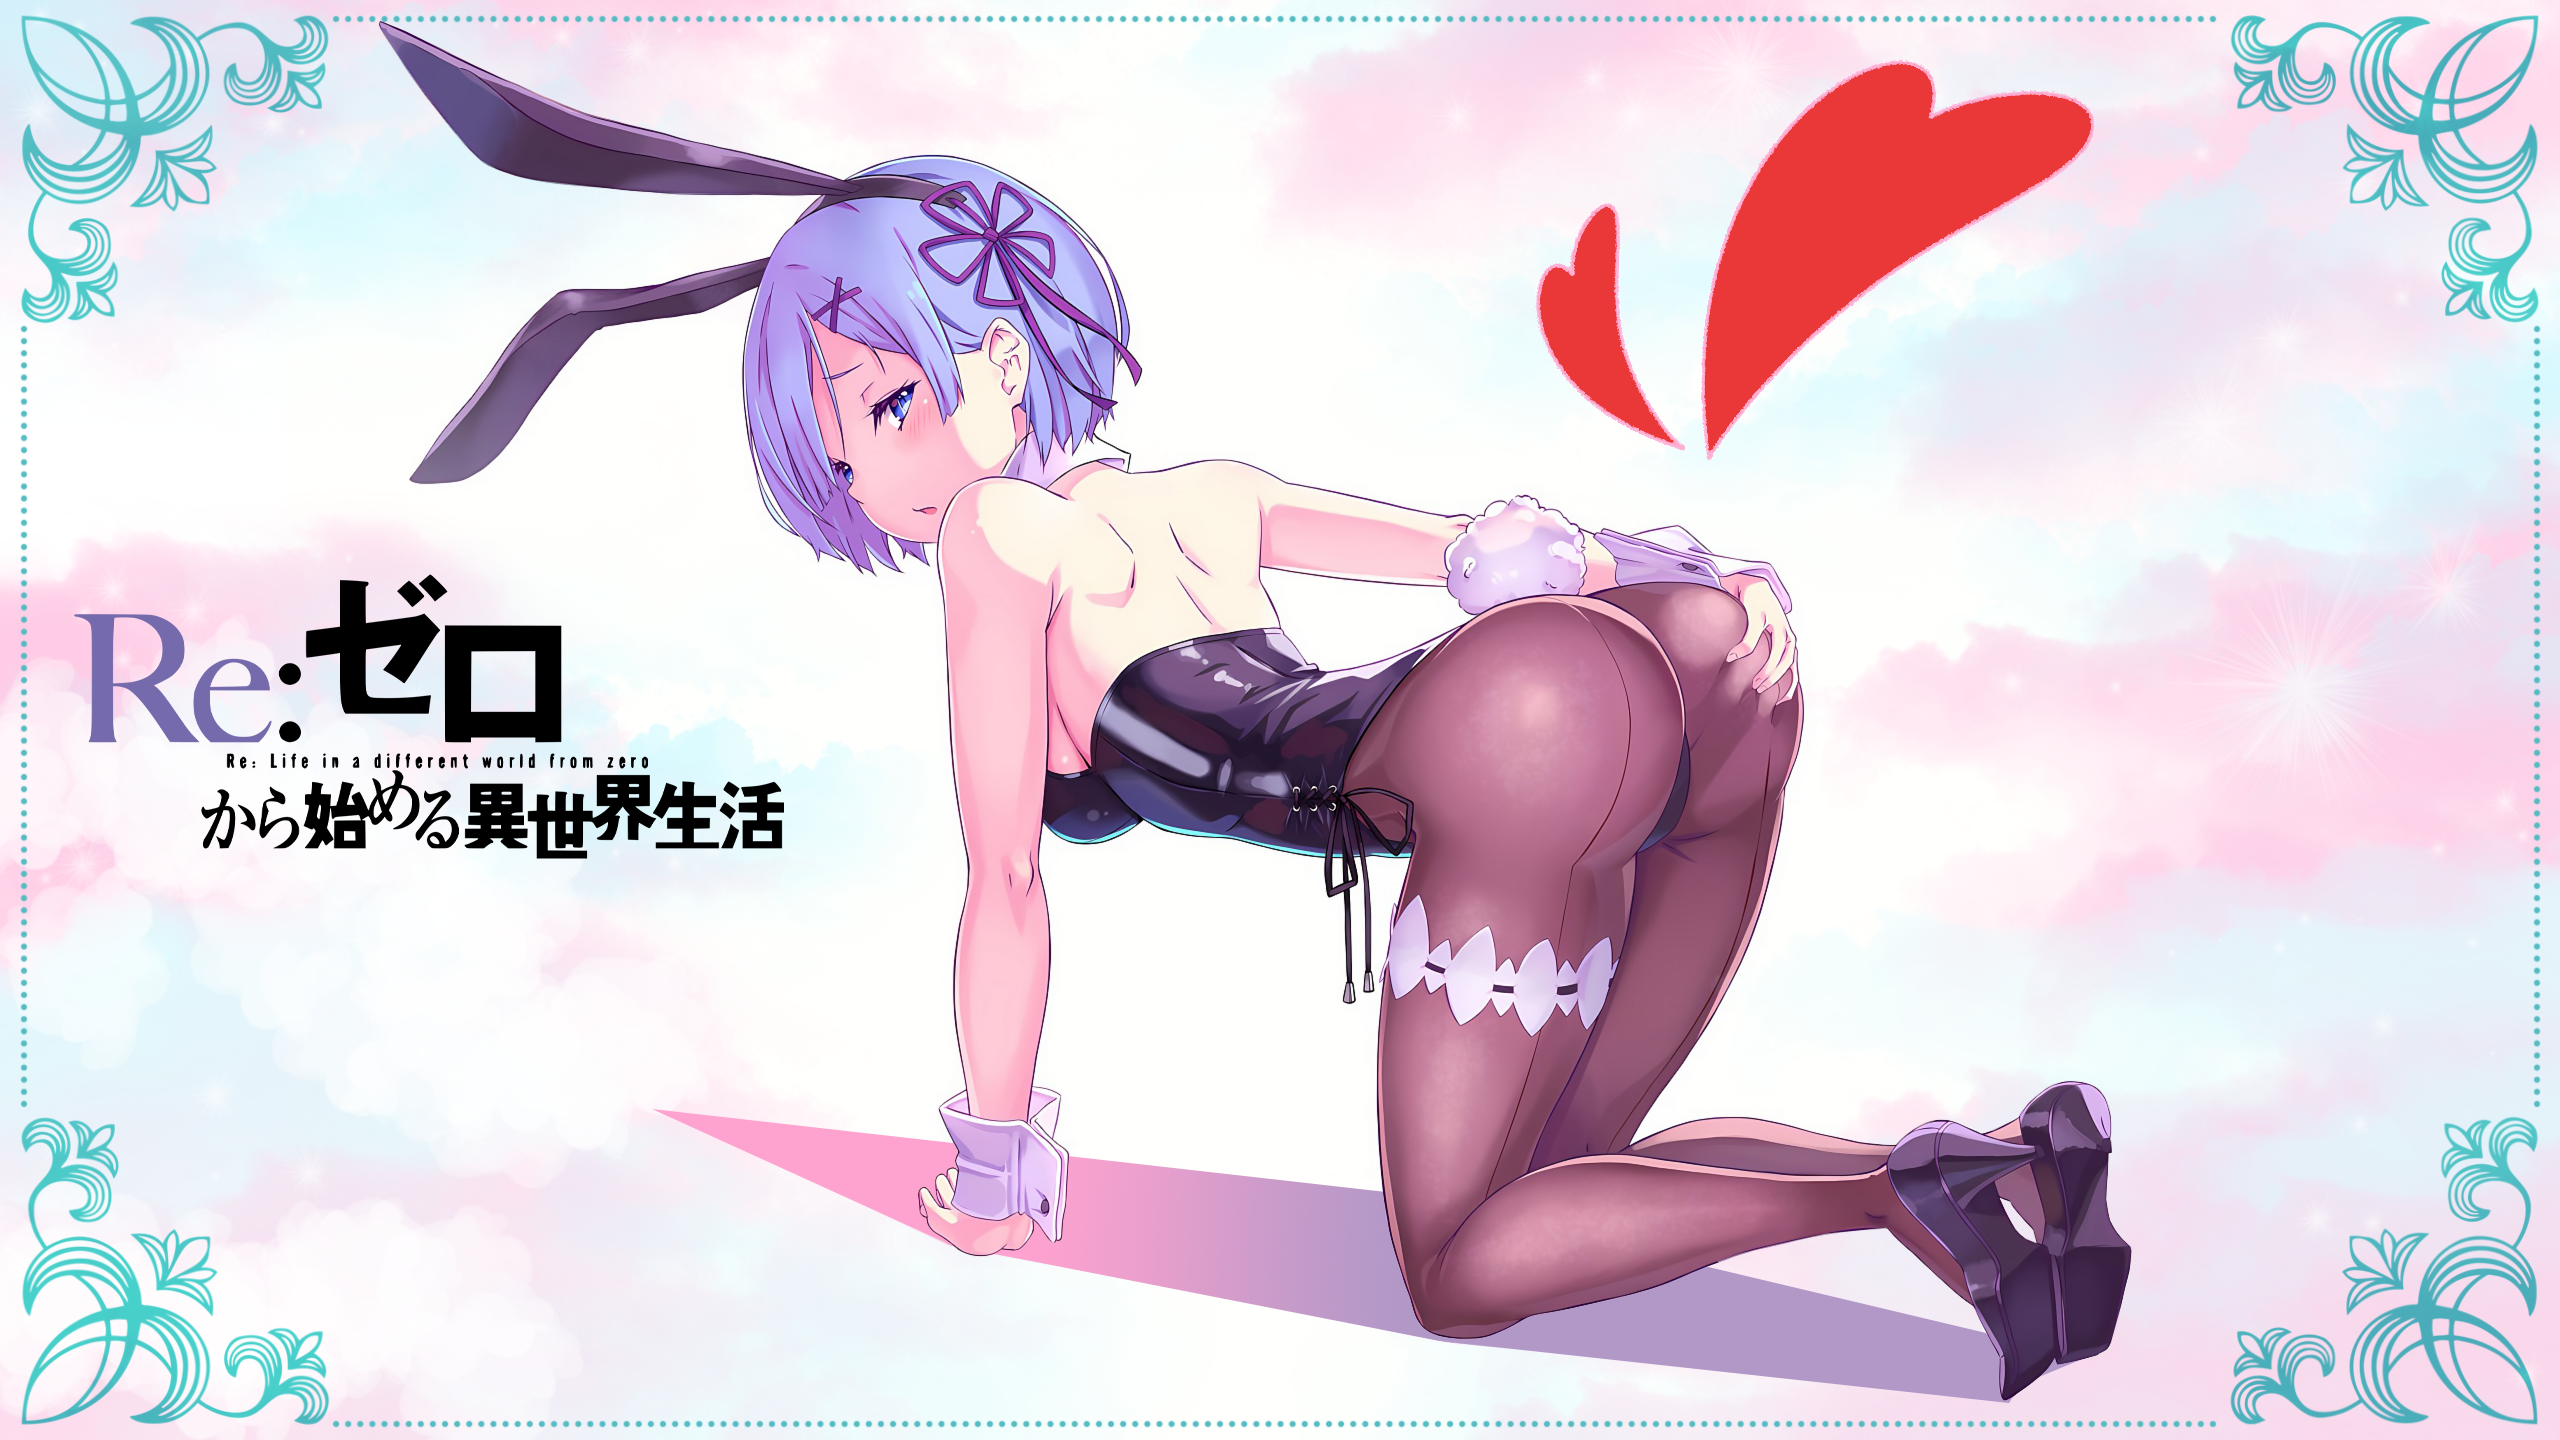 Anime 2560x1440 anime anime girls Re:Zero Kara Hajimeru Isekai Seikatsu Rem (Re:Zero) blue hair ass looking at viewer black stockings bunny ears blushing